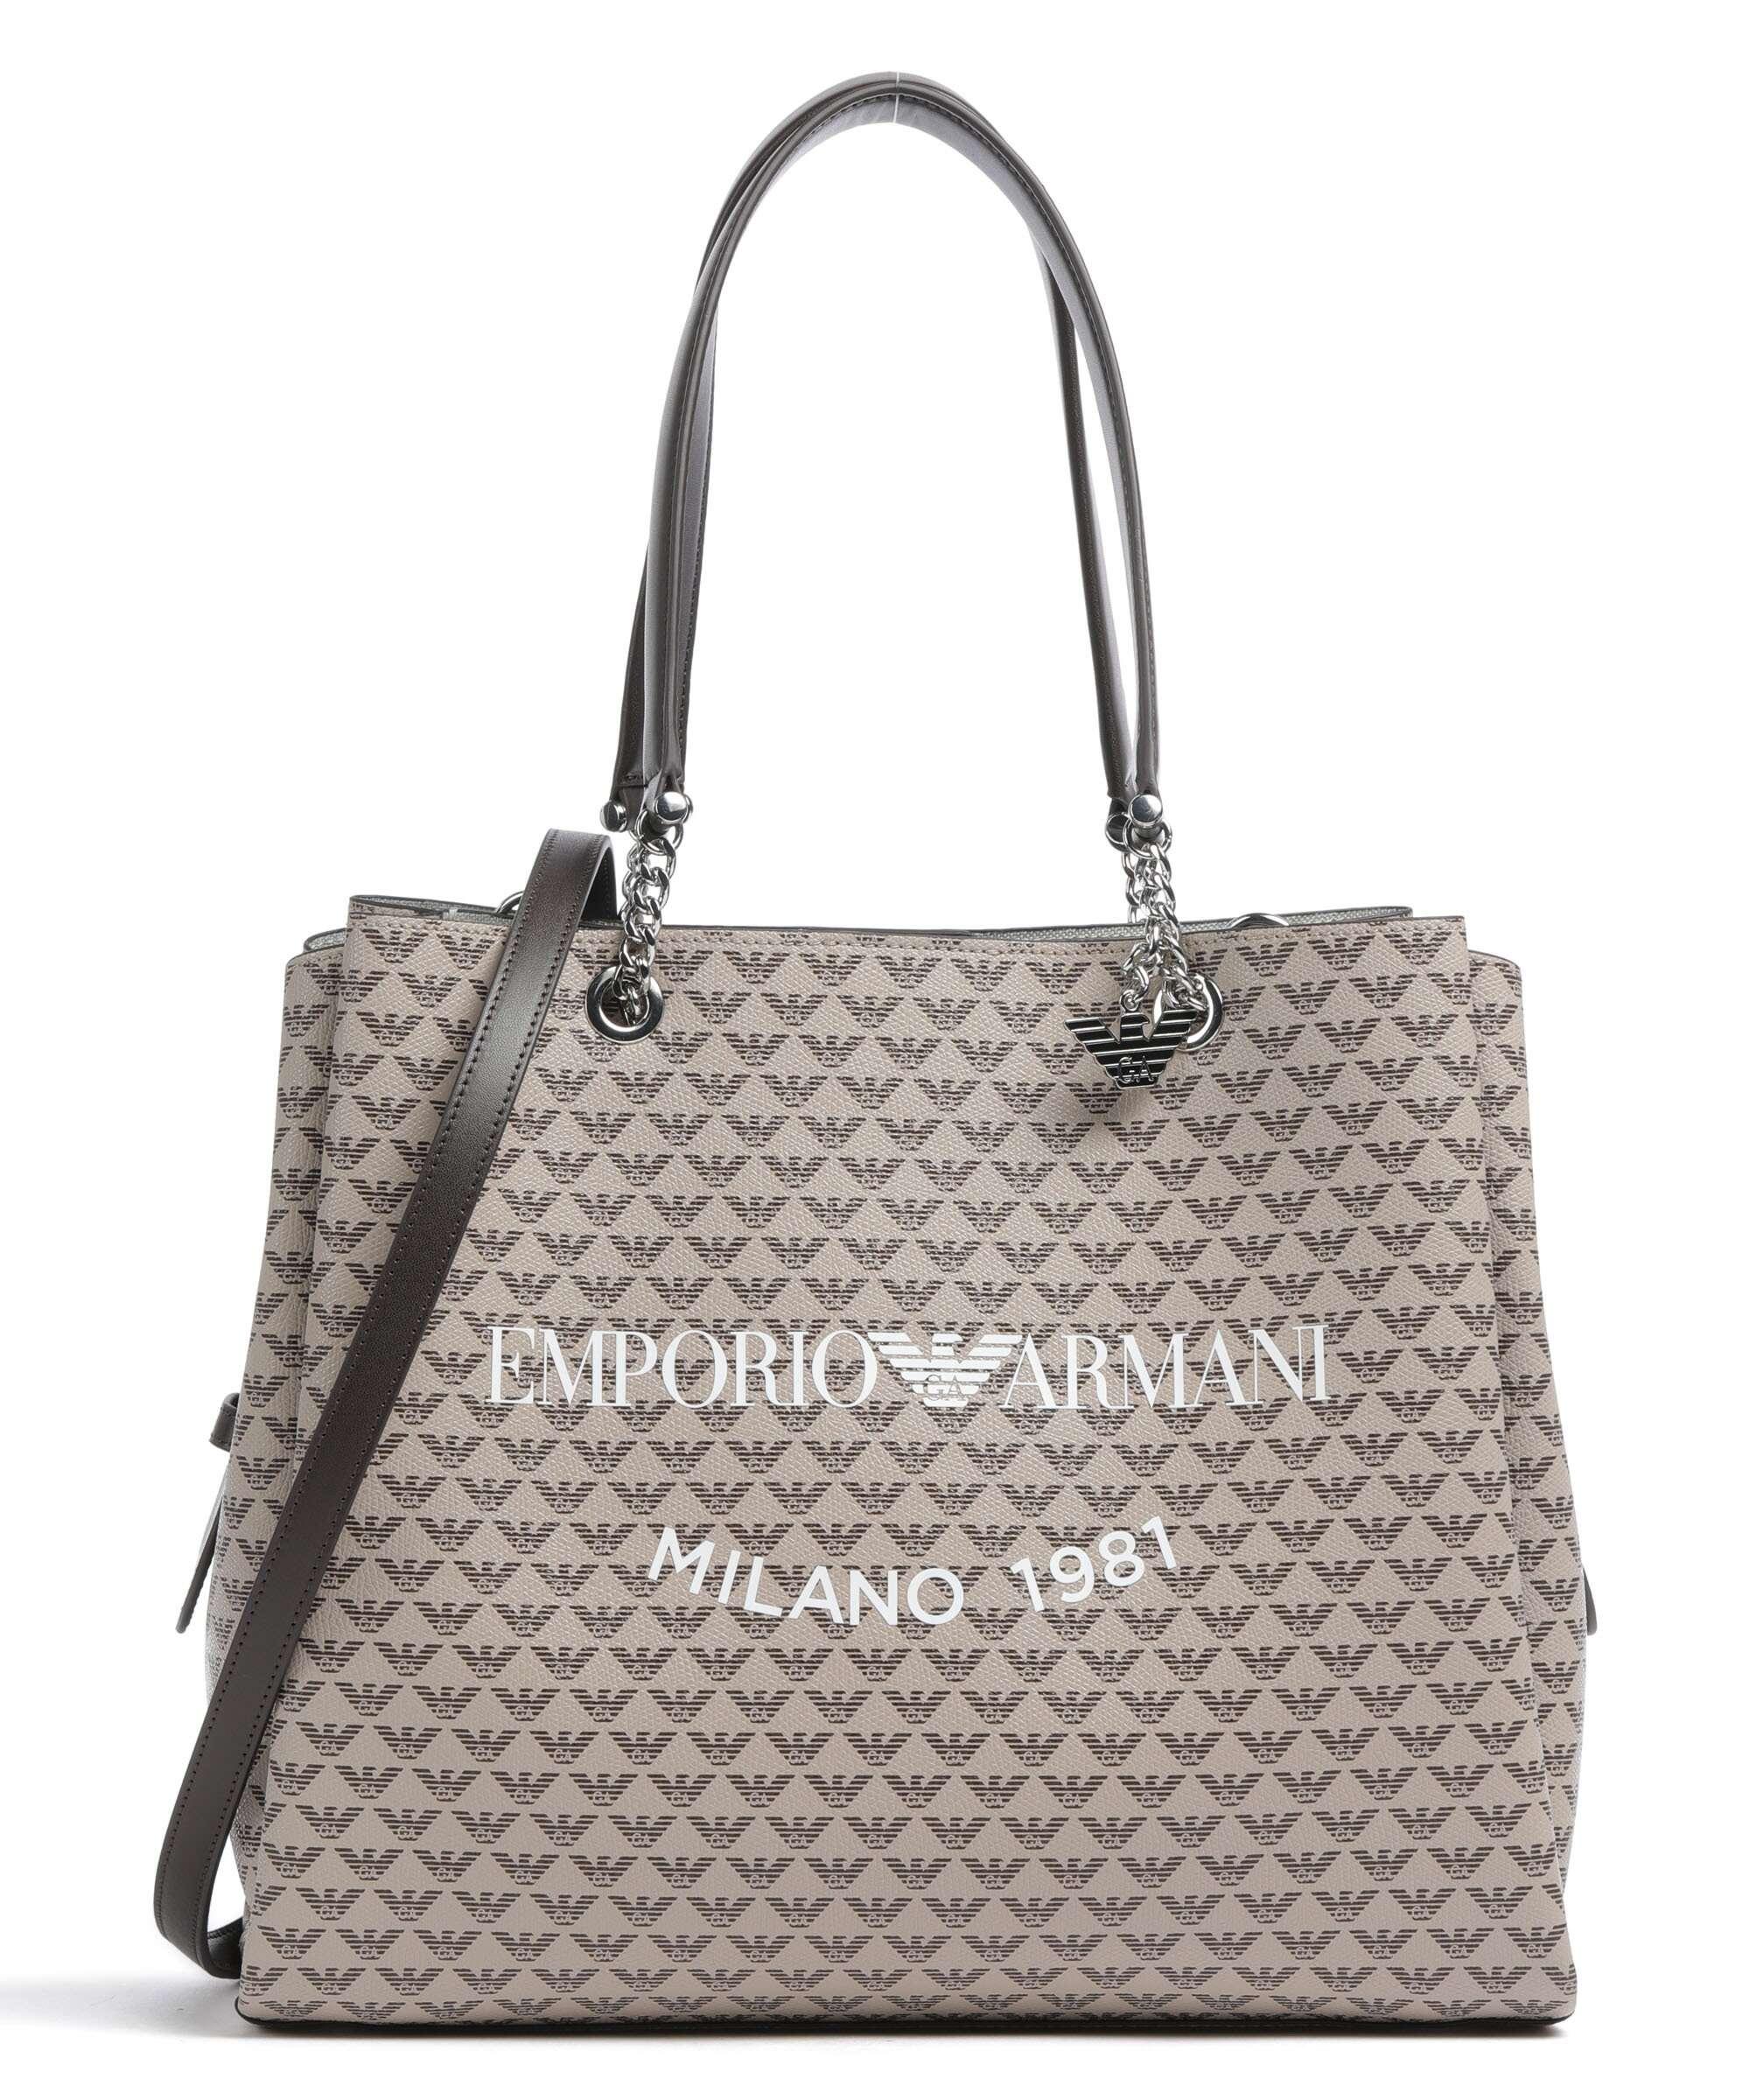 Emporio Armani Bags for Women - Shop on FARFETCH